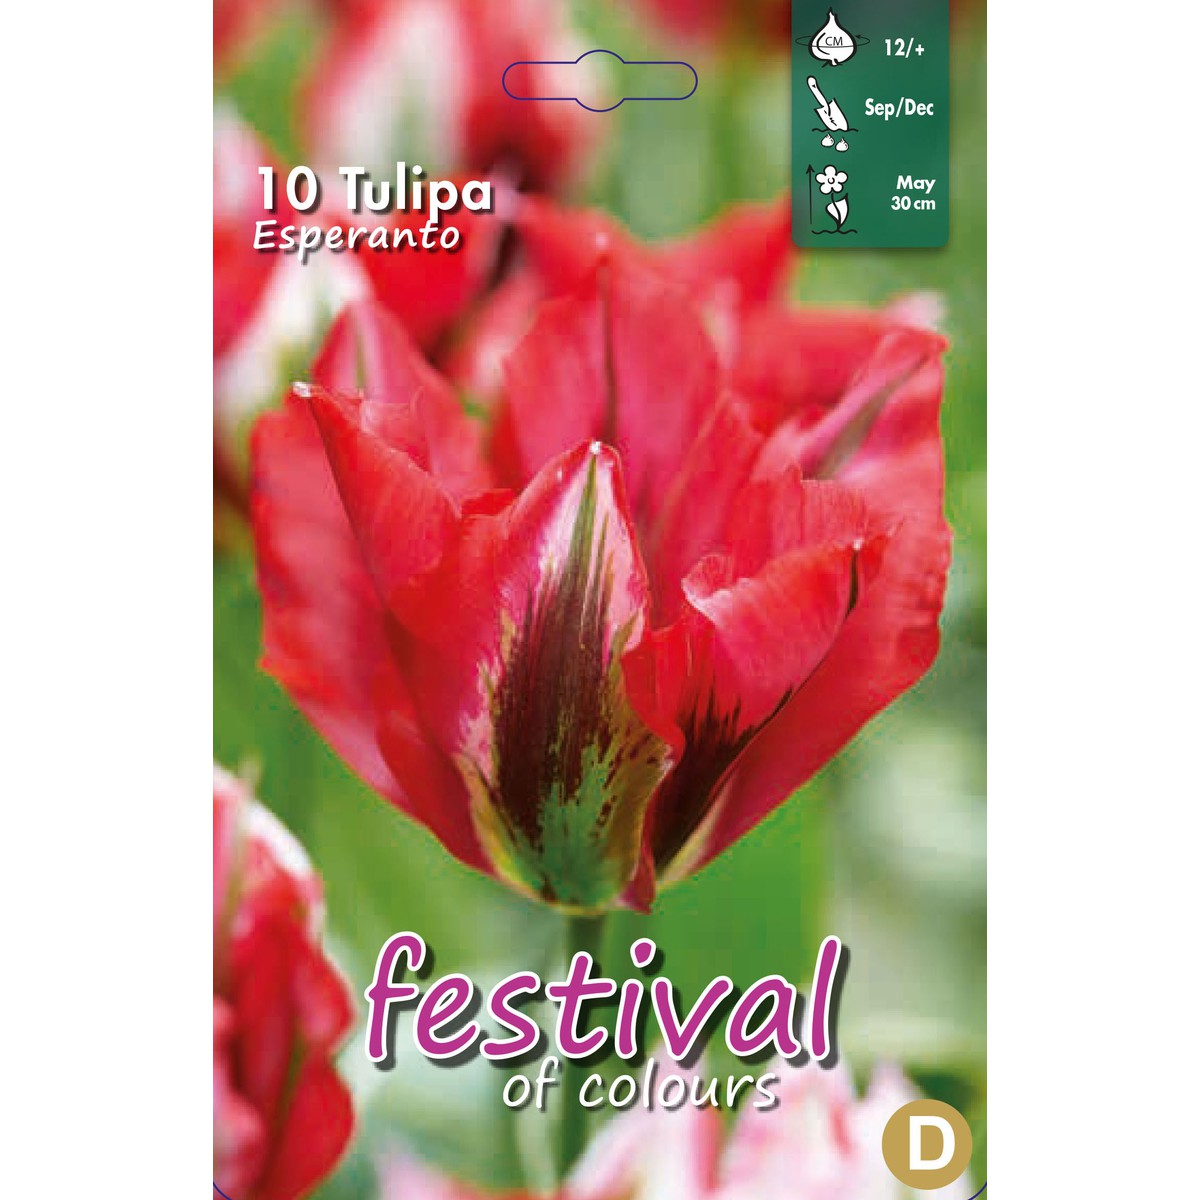   Tulipes 'Esperanto'  10 pcs 12/+